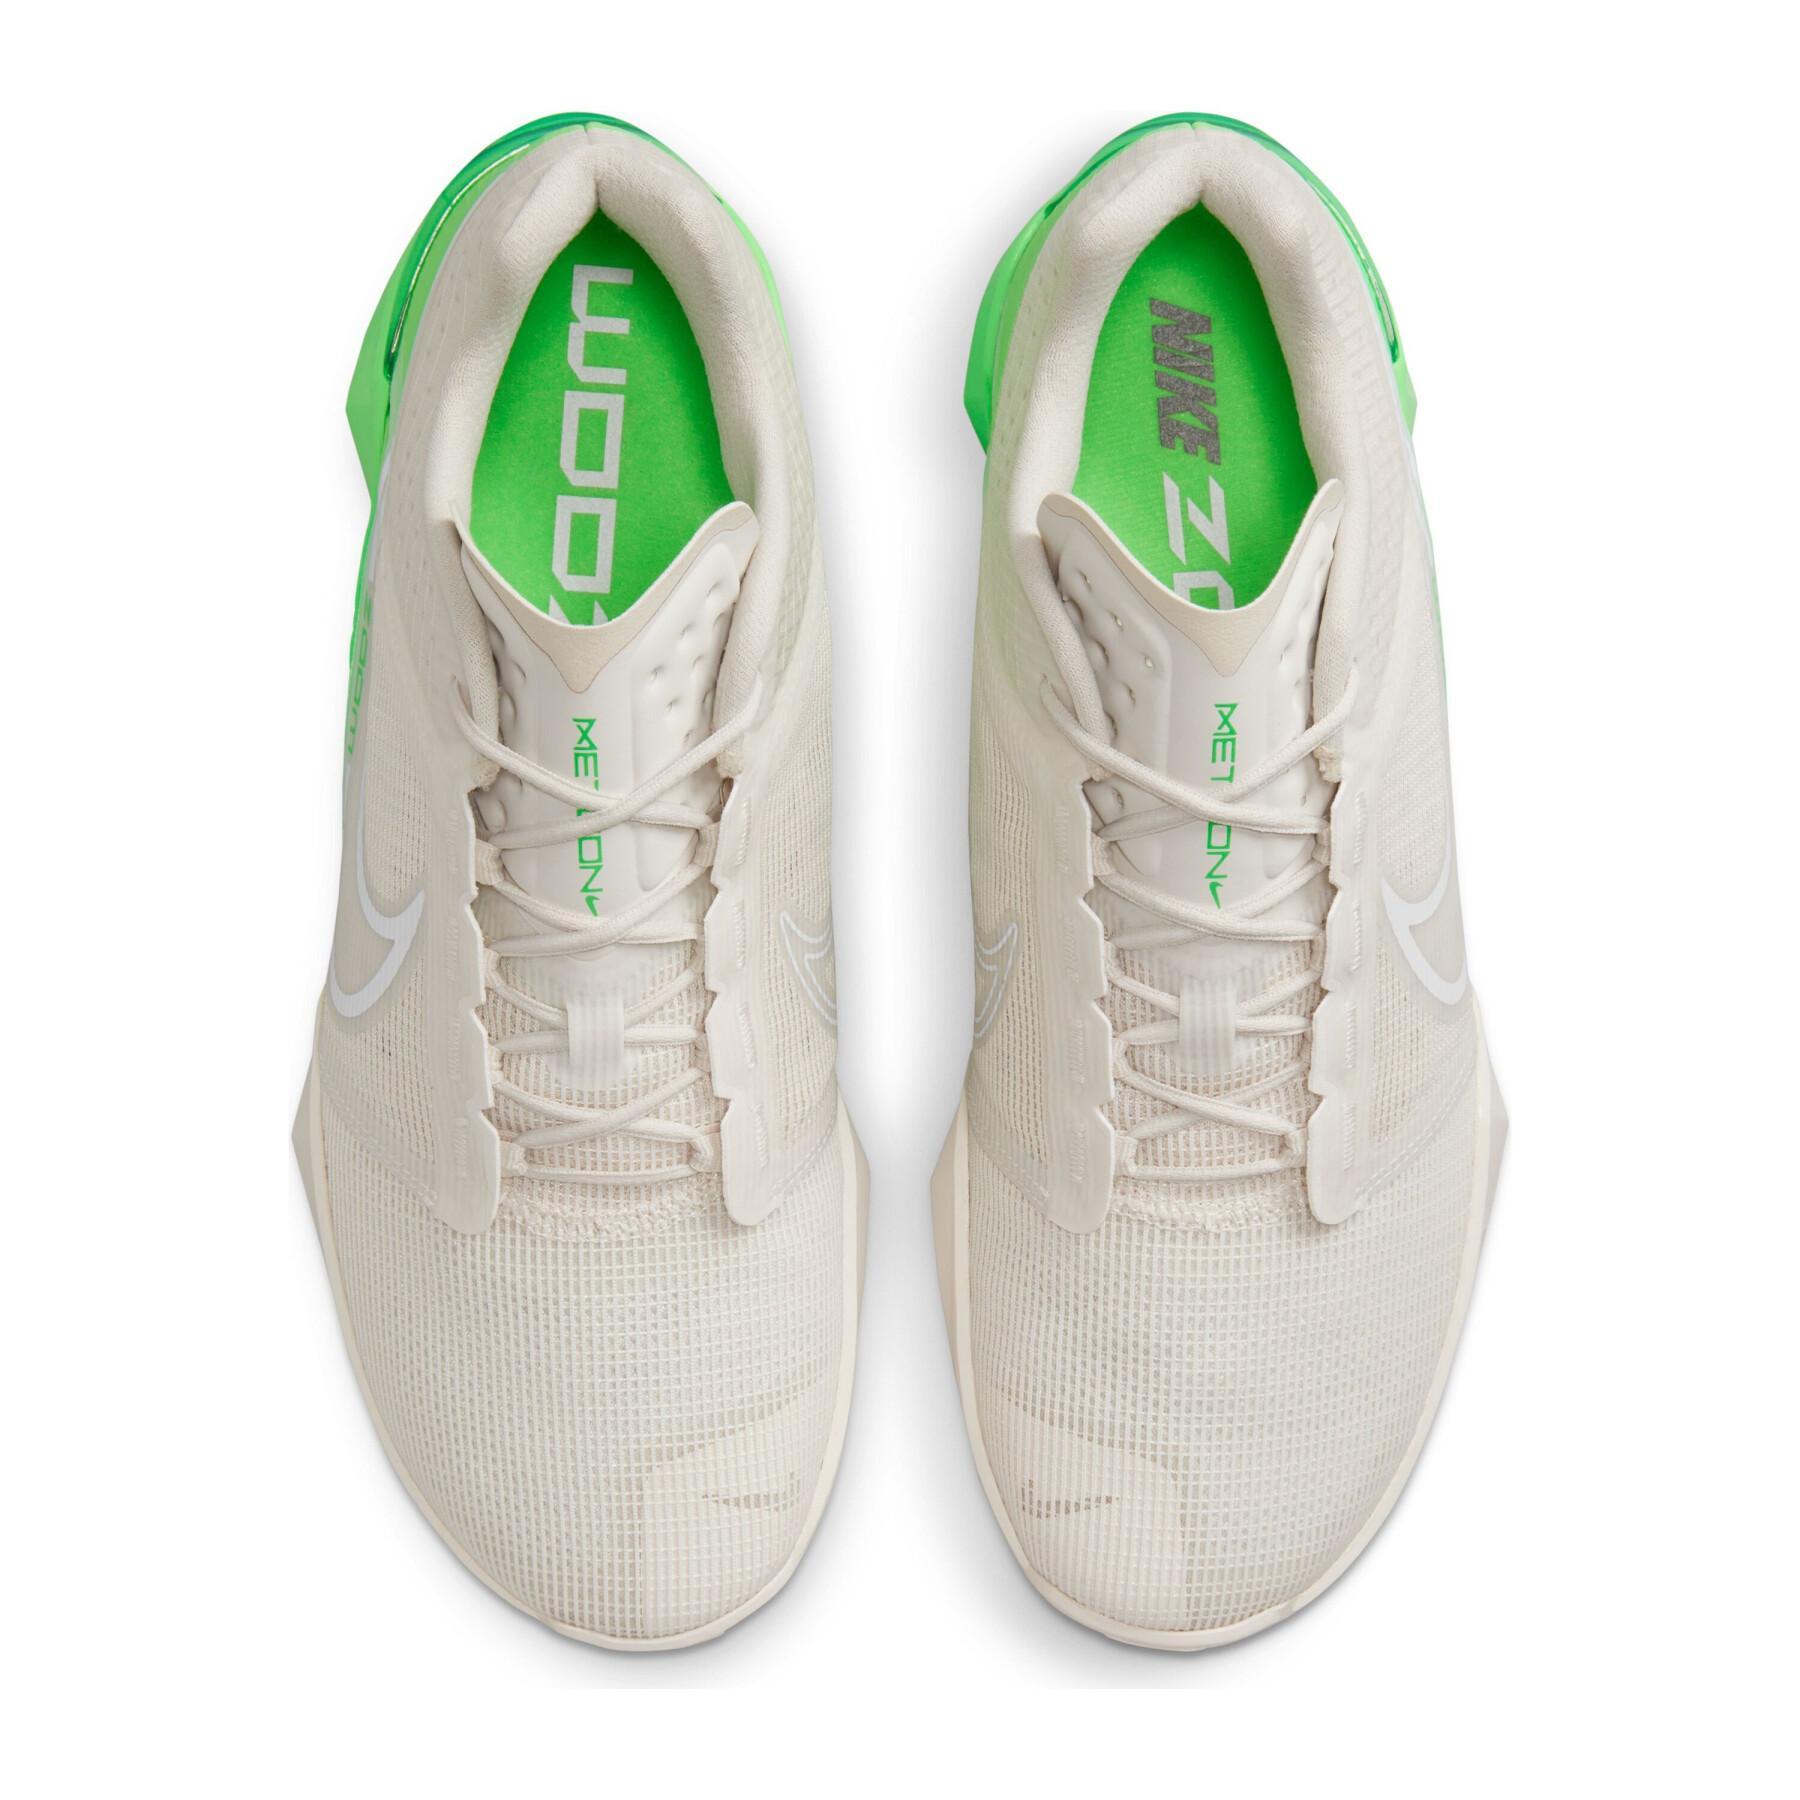 Sapatos de treino cruzado Nike Zoom Metcon Turbo 2